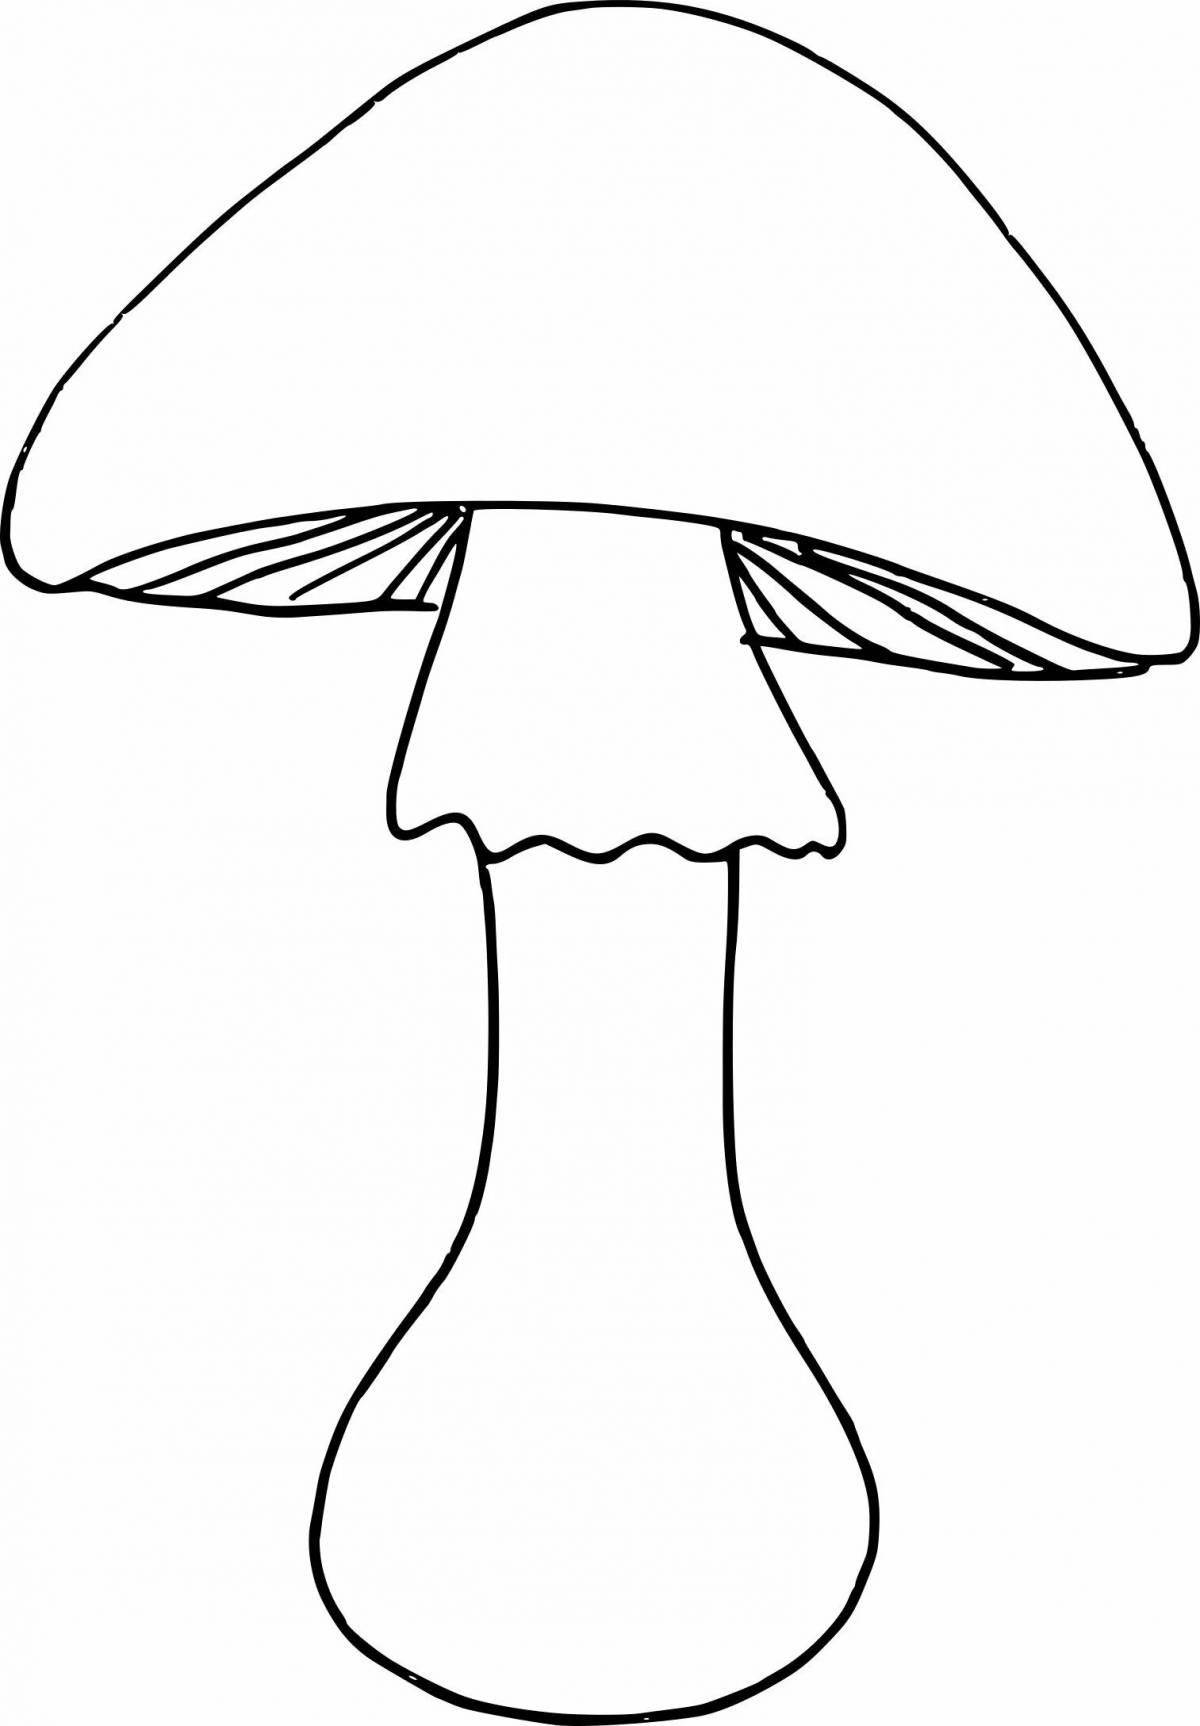 Bright toadstool mushrooms